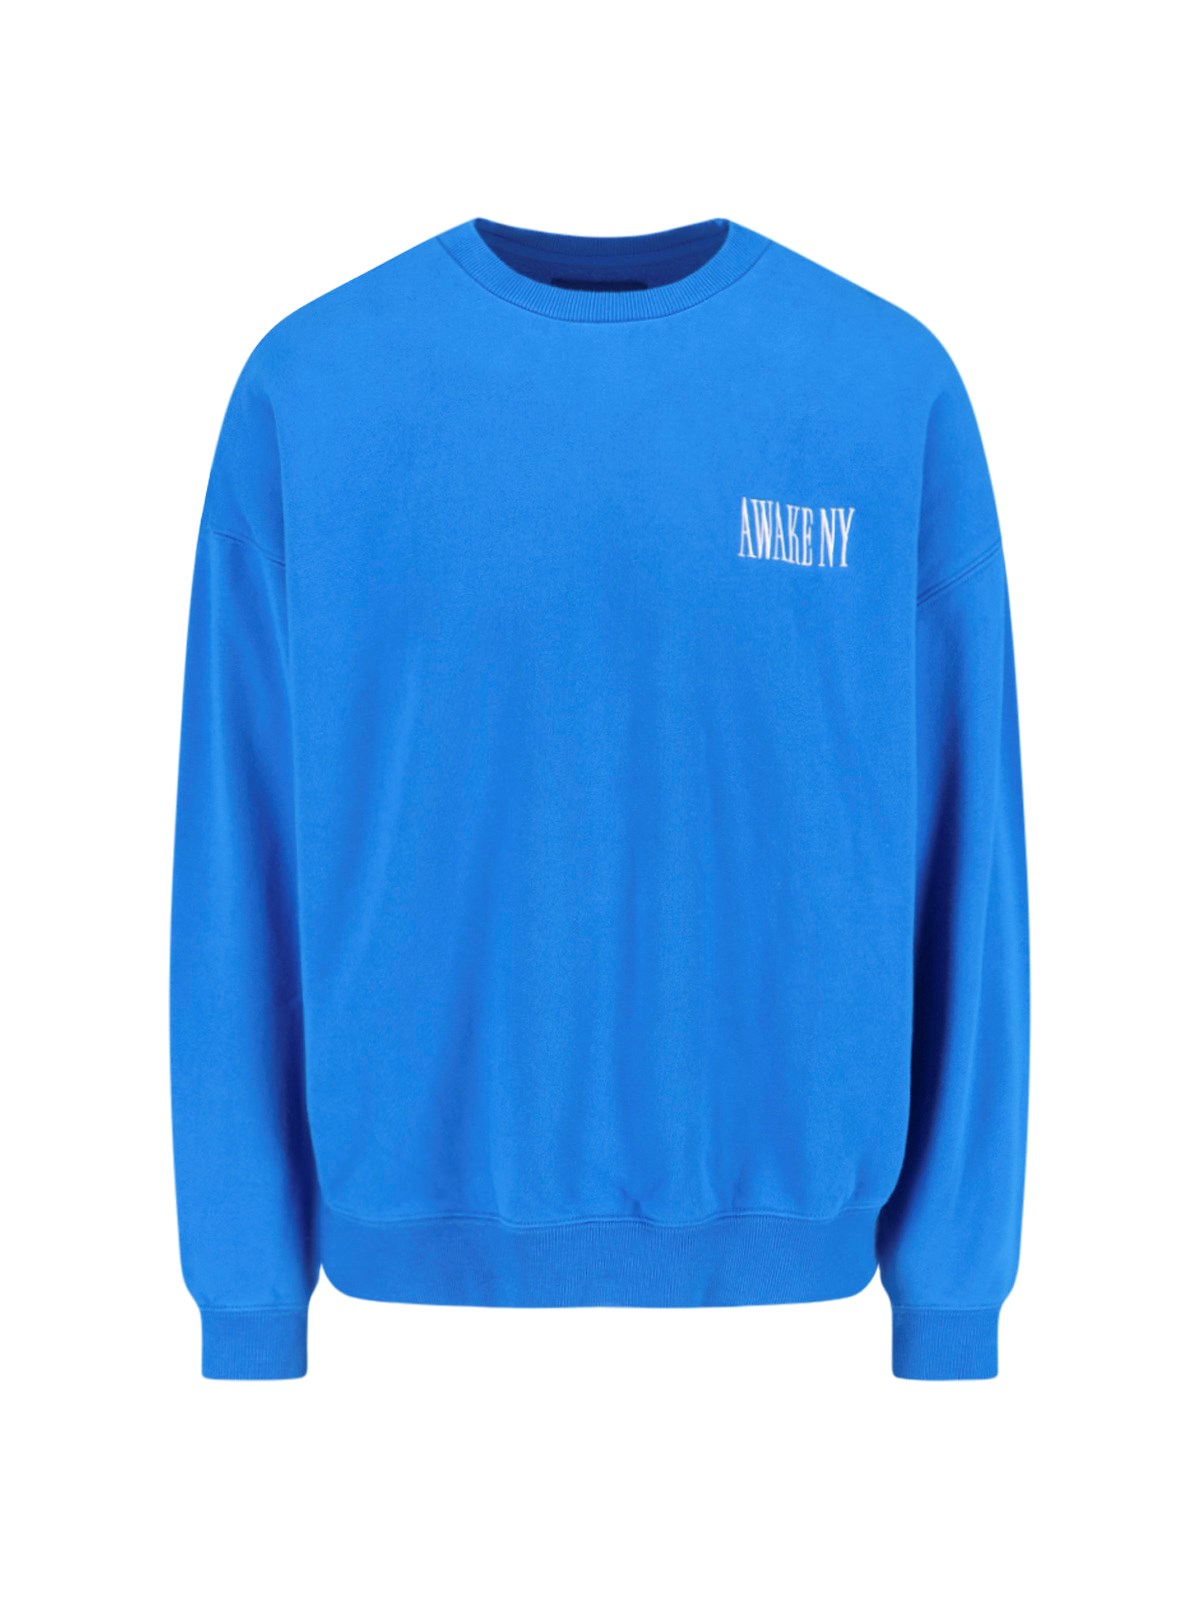 Shop Awake Ny 'spire' Crew Neck Sweatshirt In Blue